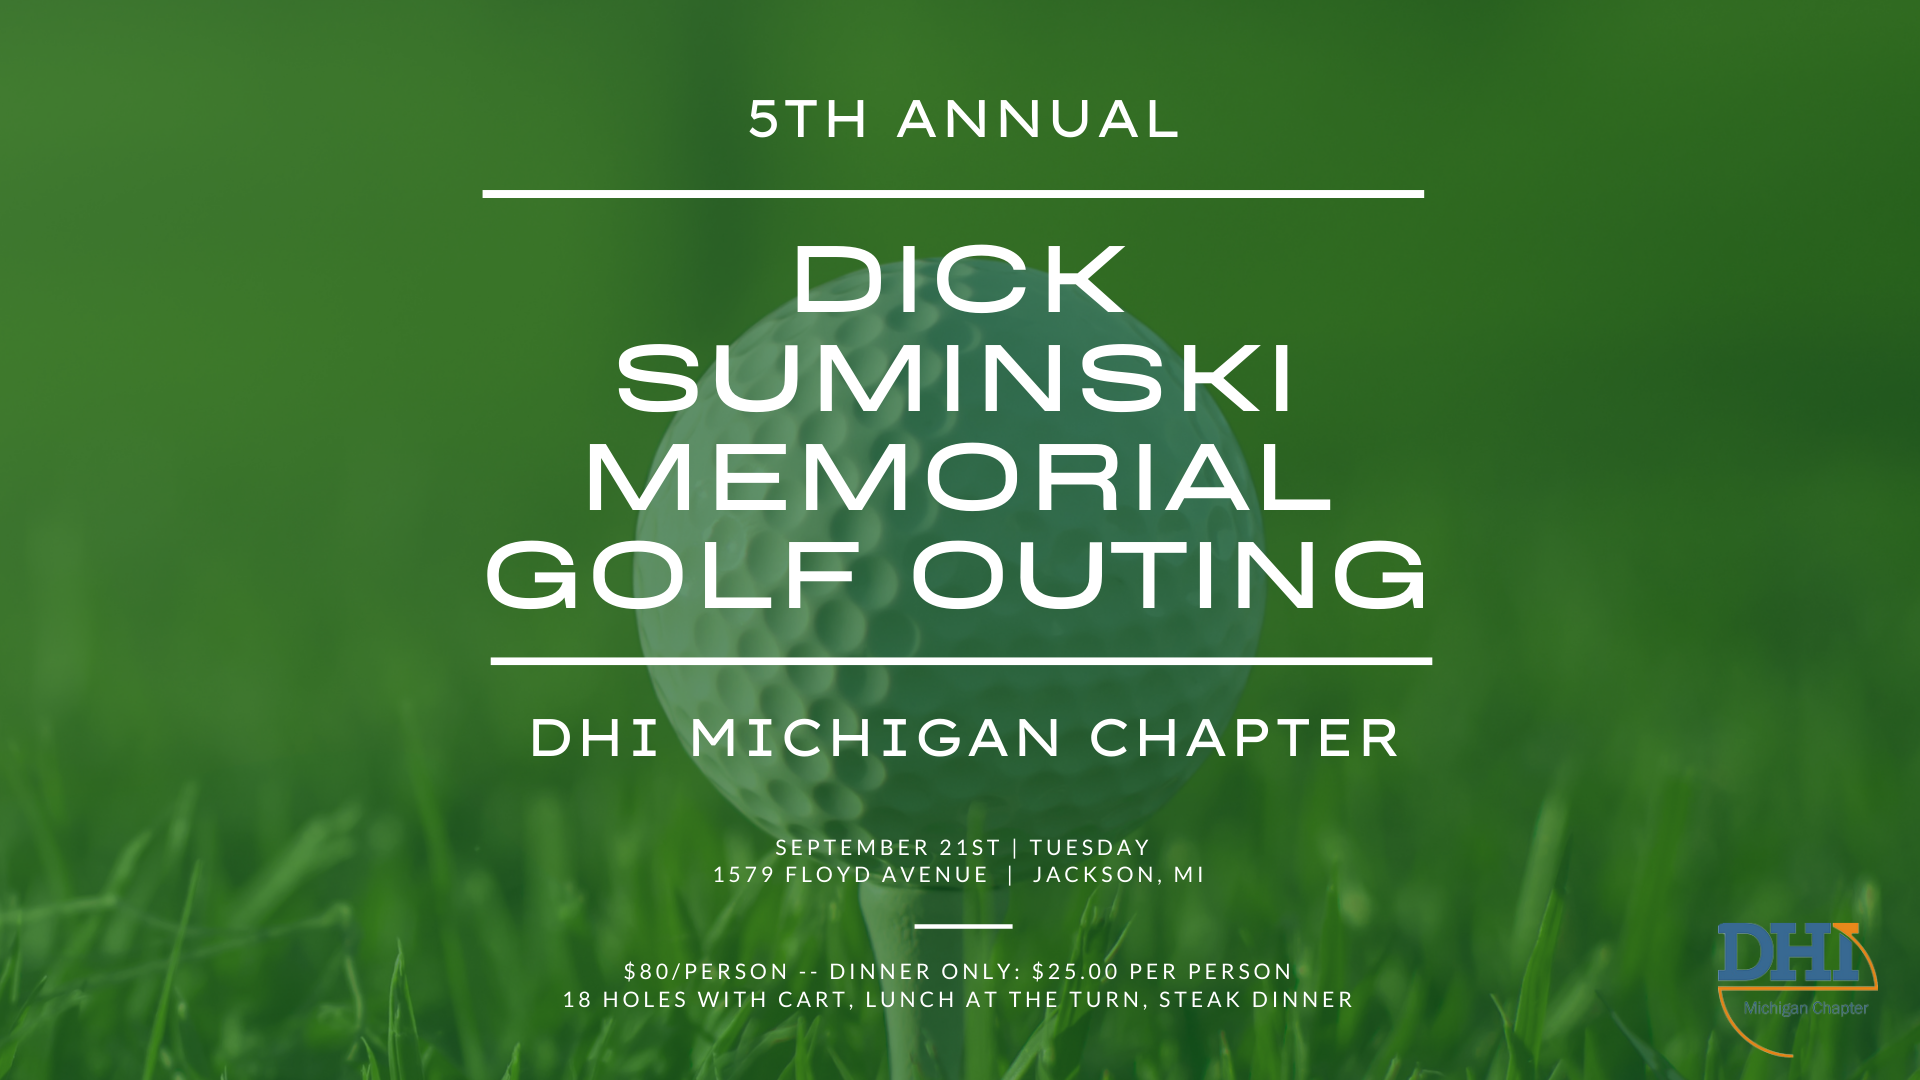 DHI MICHIGAN - 5th Annual Dick Suminski Memorial Golf Outing